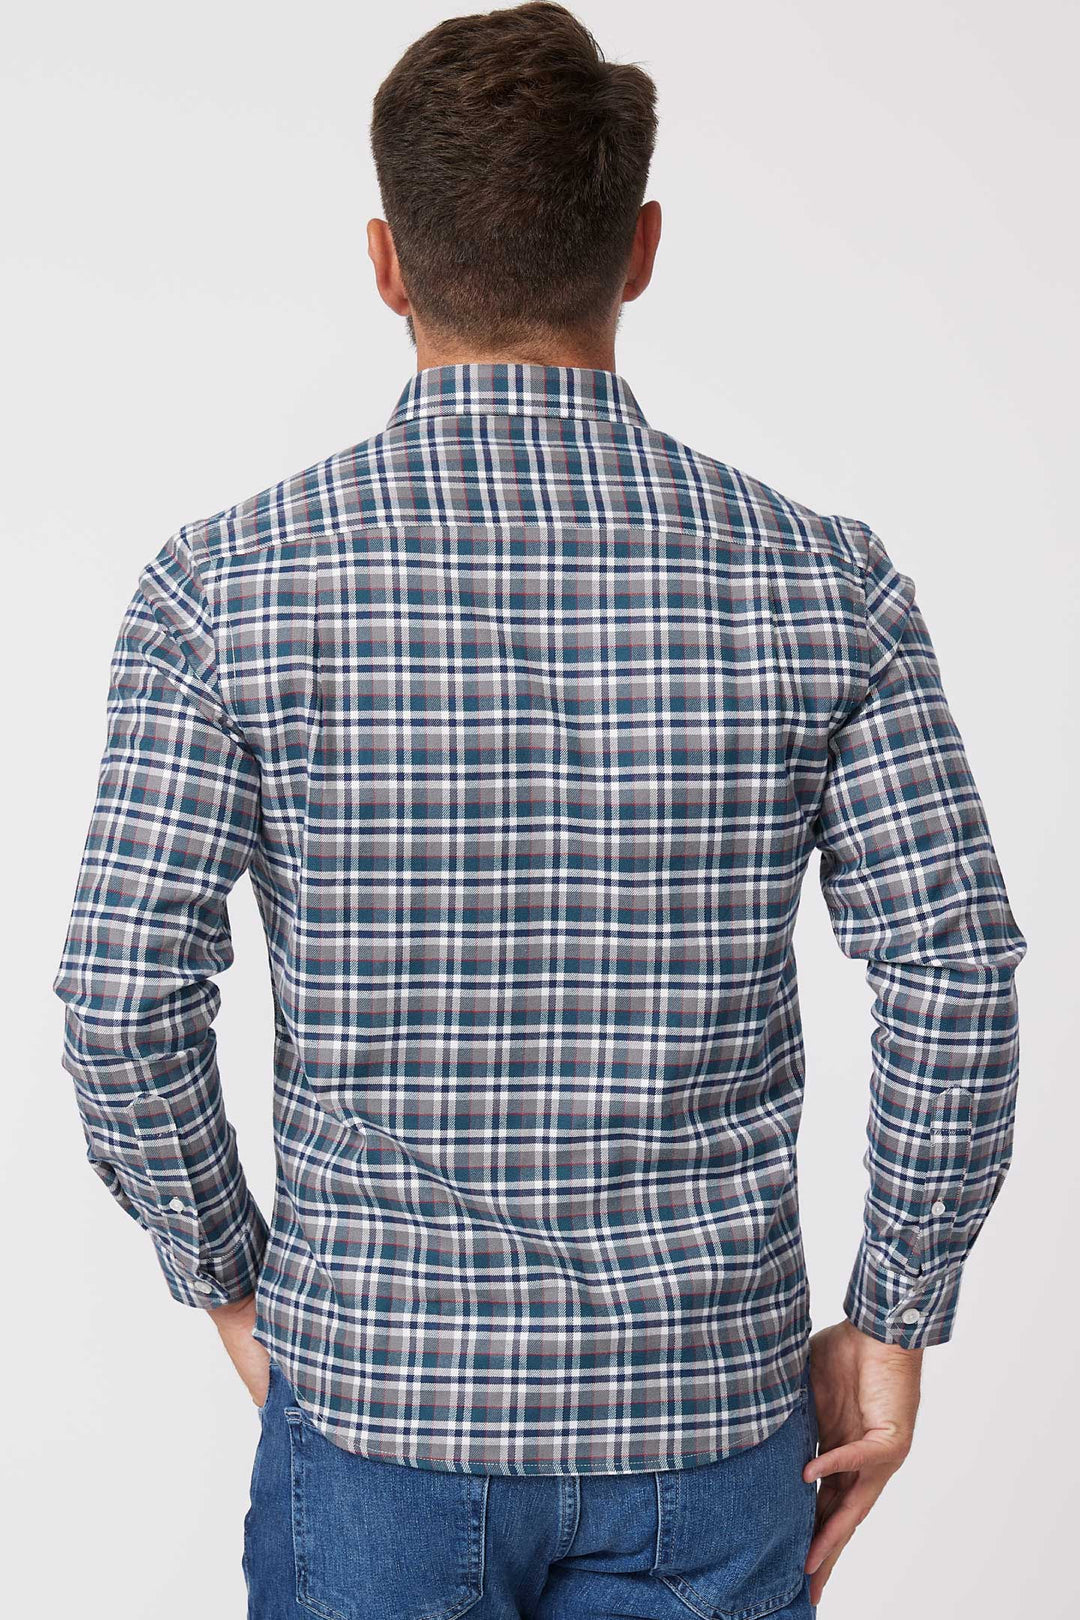 Buy Sequoia Plaid Flannel Button-Down Shirt for Short Men | Ash & Erie   Flannel Everyday Shirt